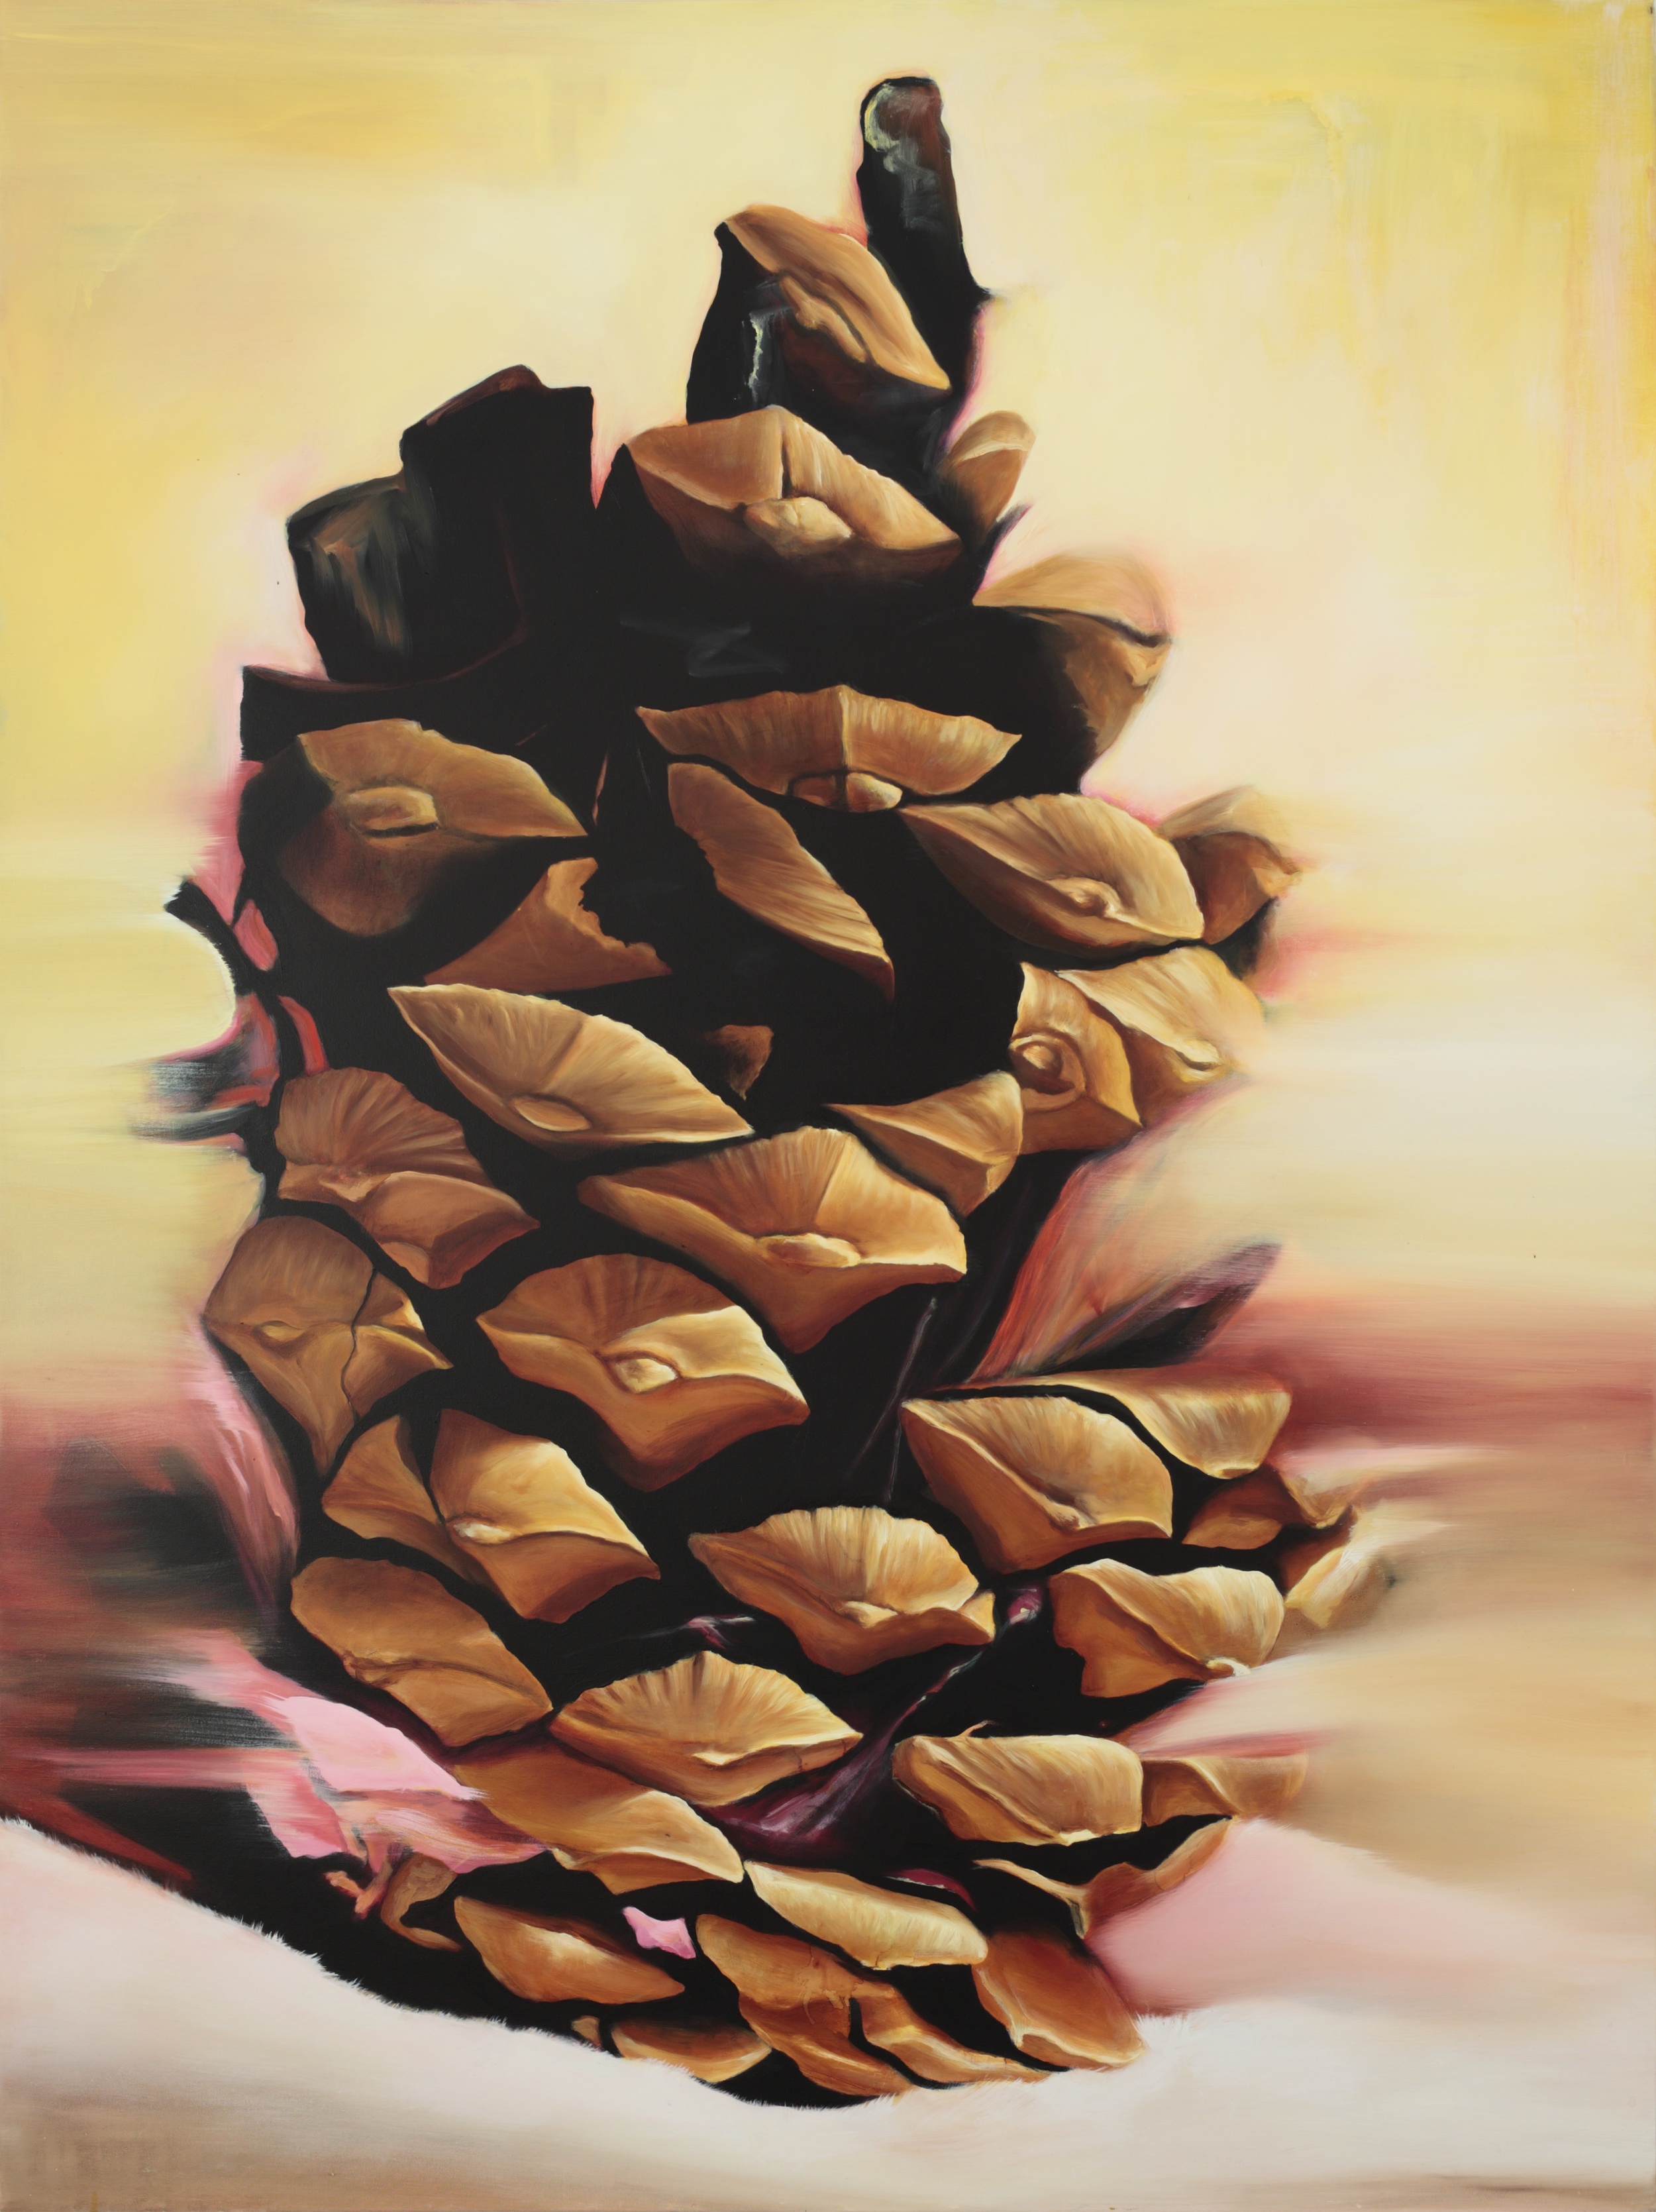 Serotiny, 64" x 48", Oil on Canvas, 2009